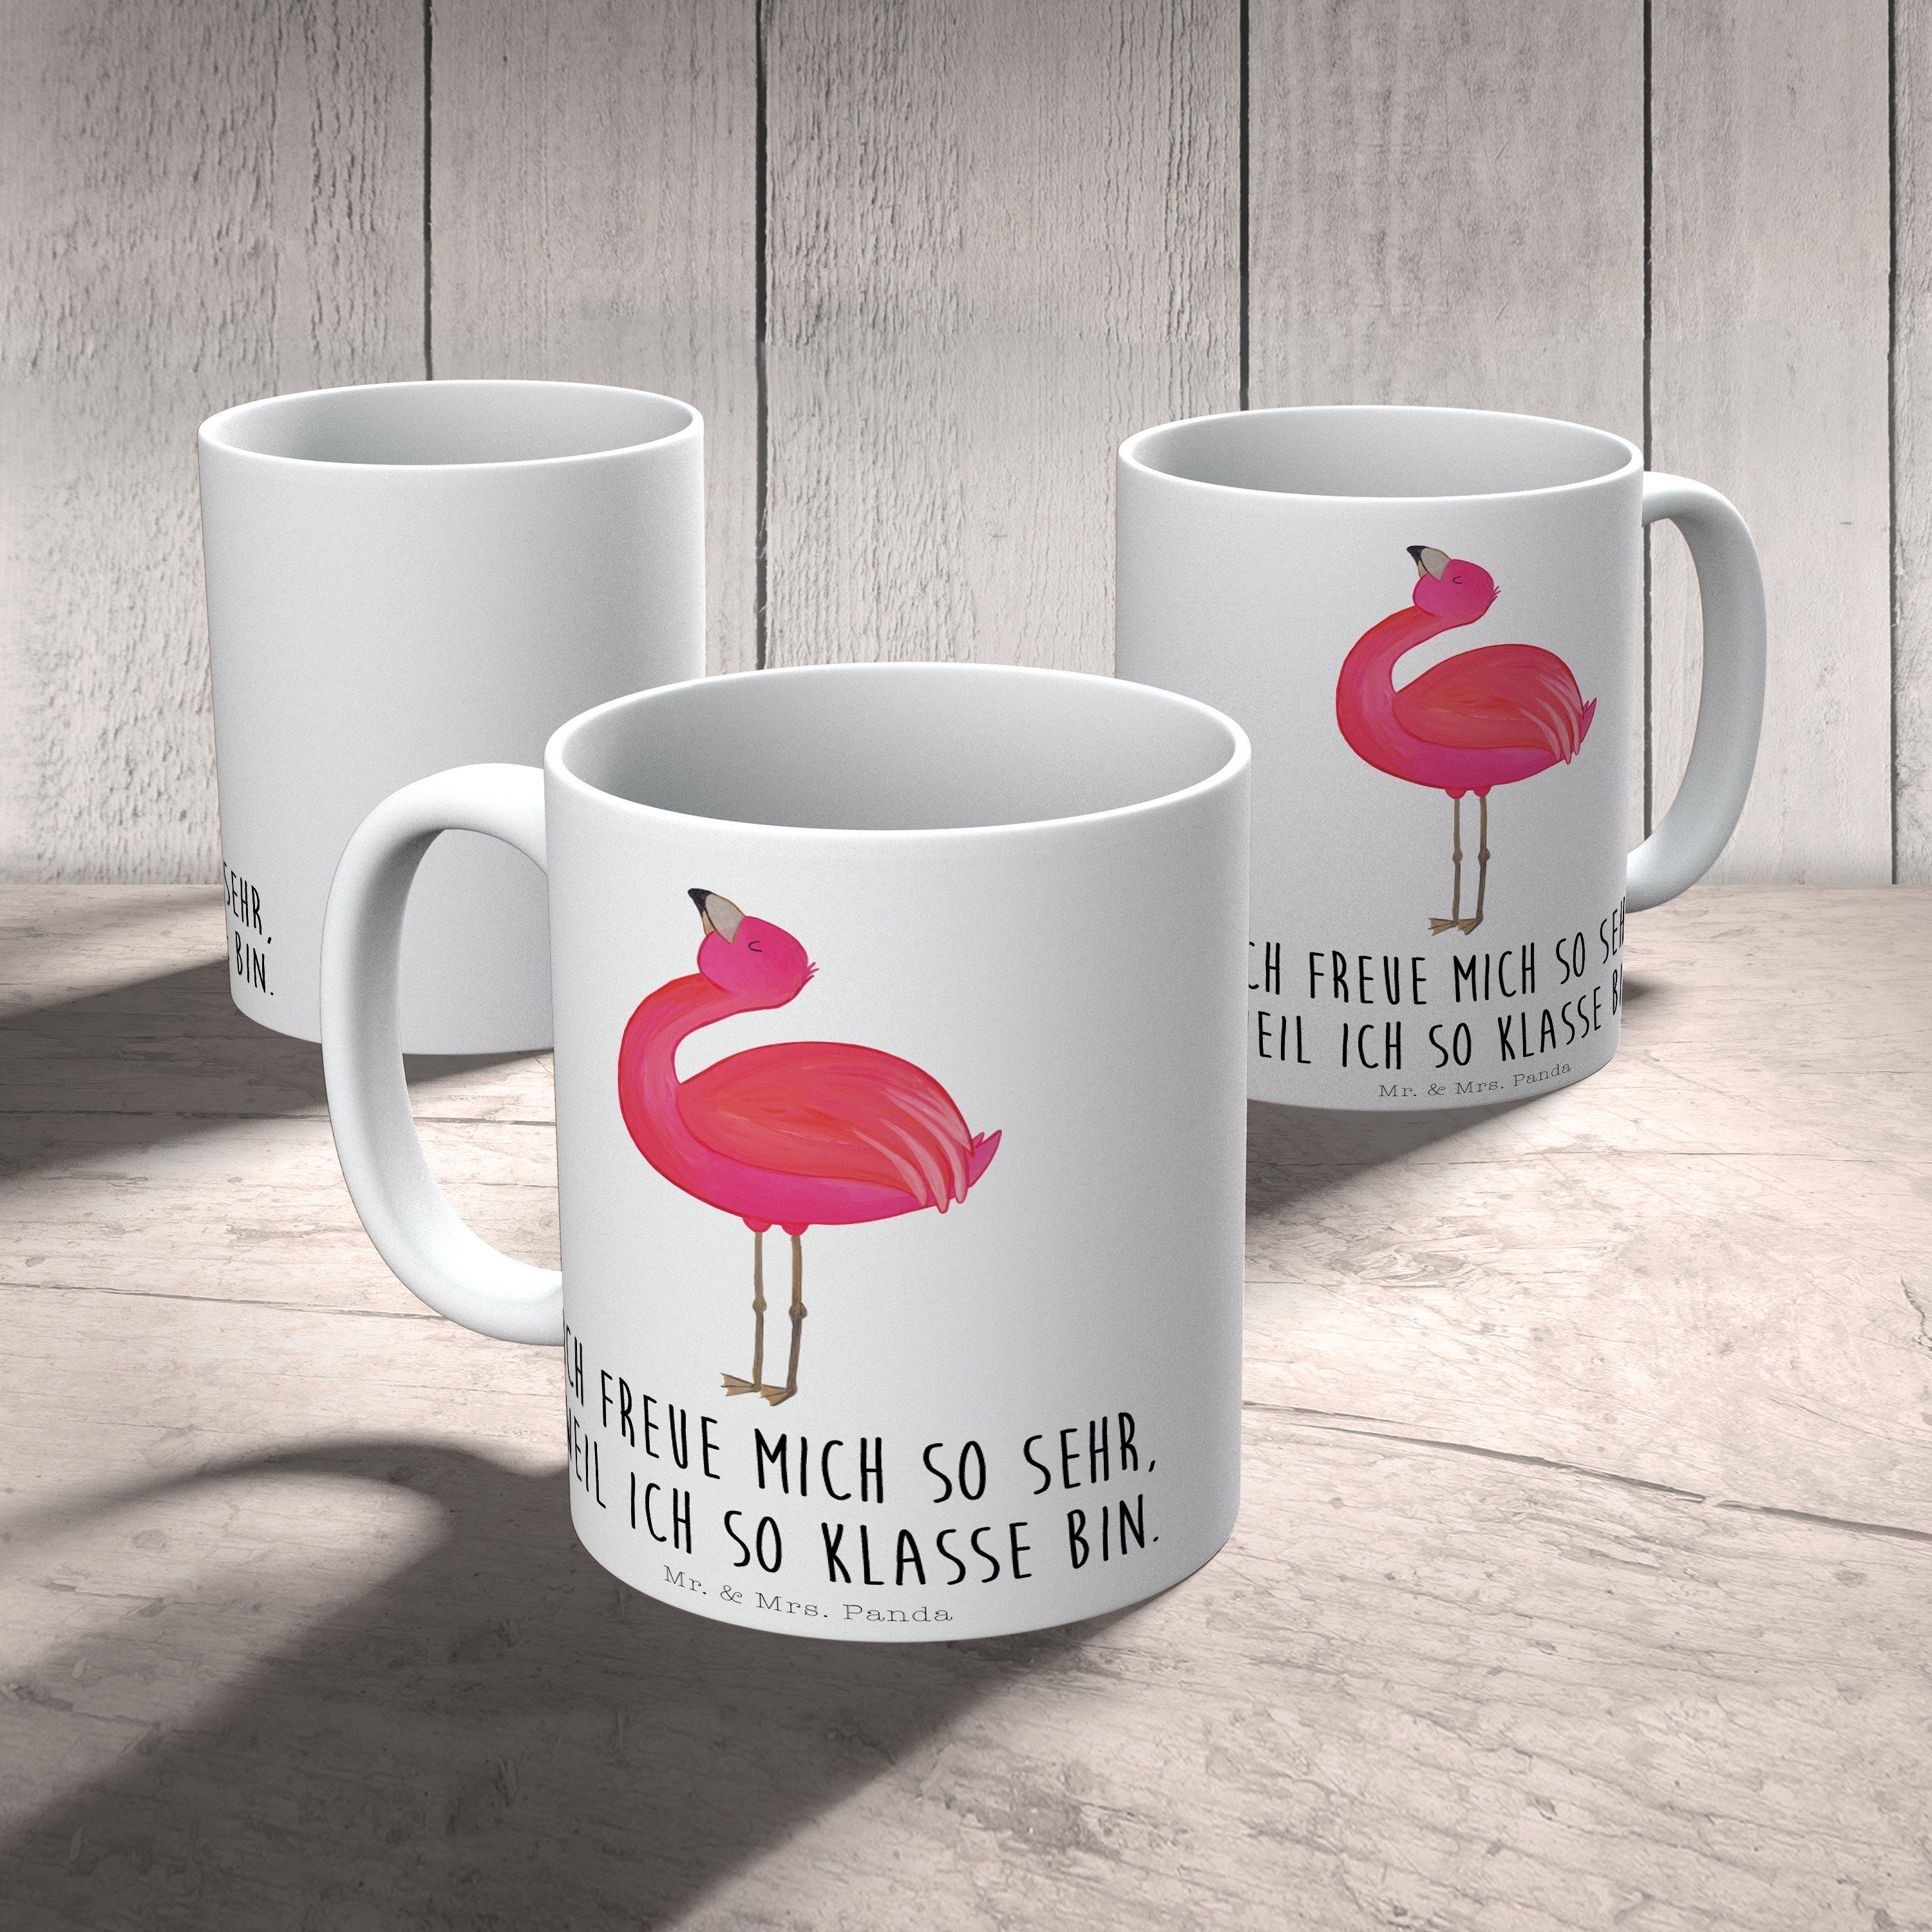 Mr. & Mrs. Panda Tasse Keramik Porzella, zufrieden, - stolz beste Freundin, Weiß - Flamingo Geschenk